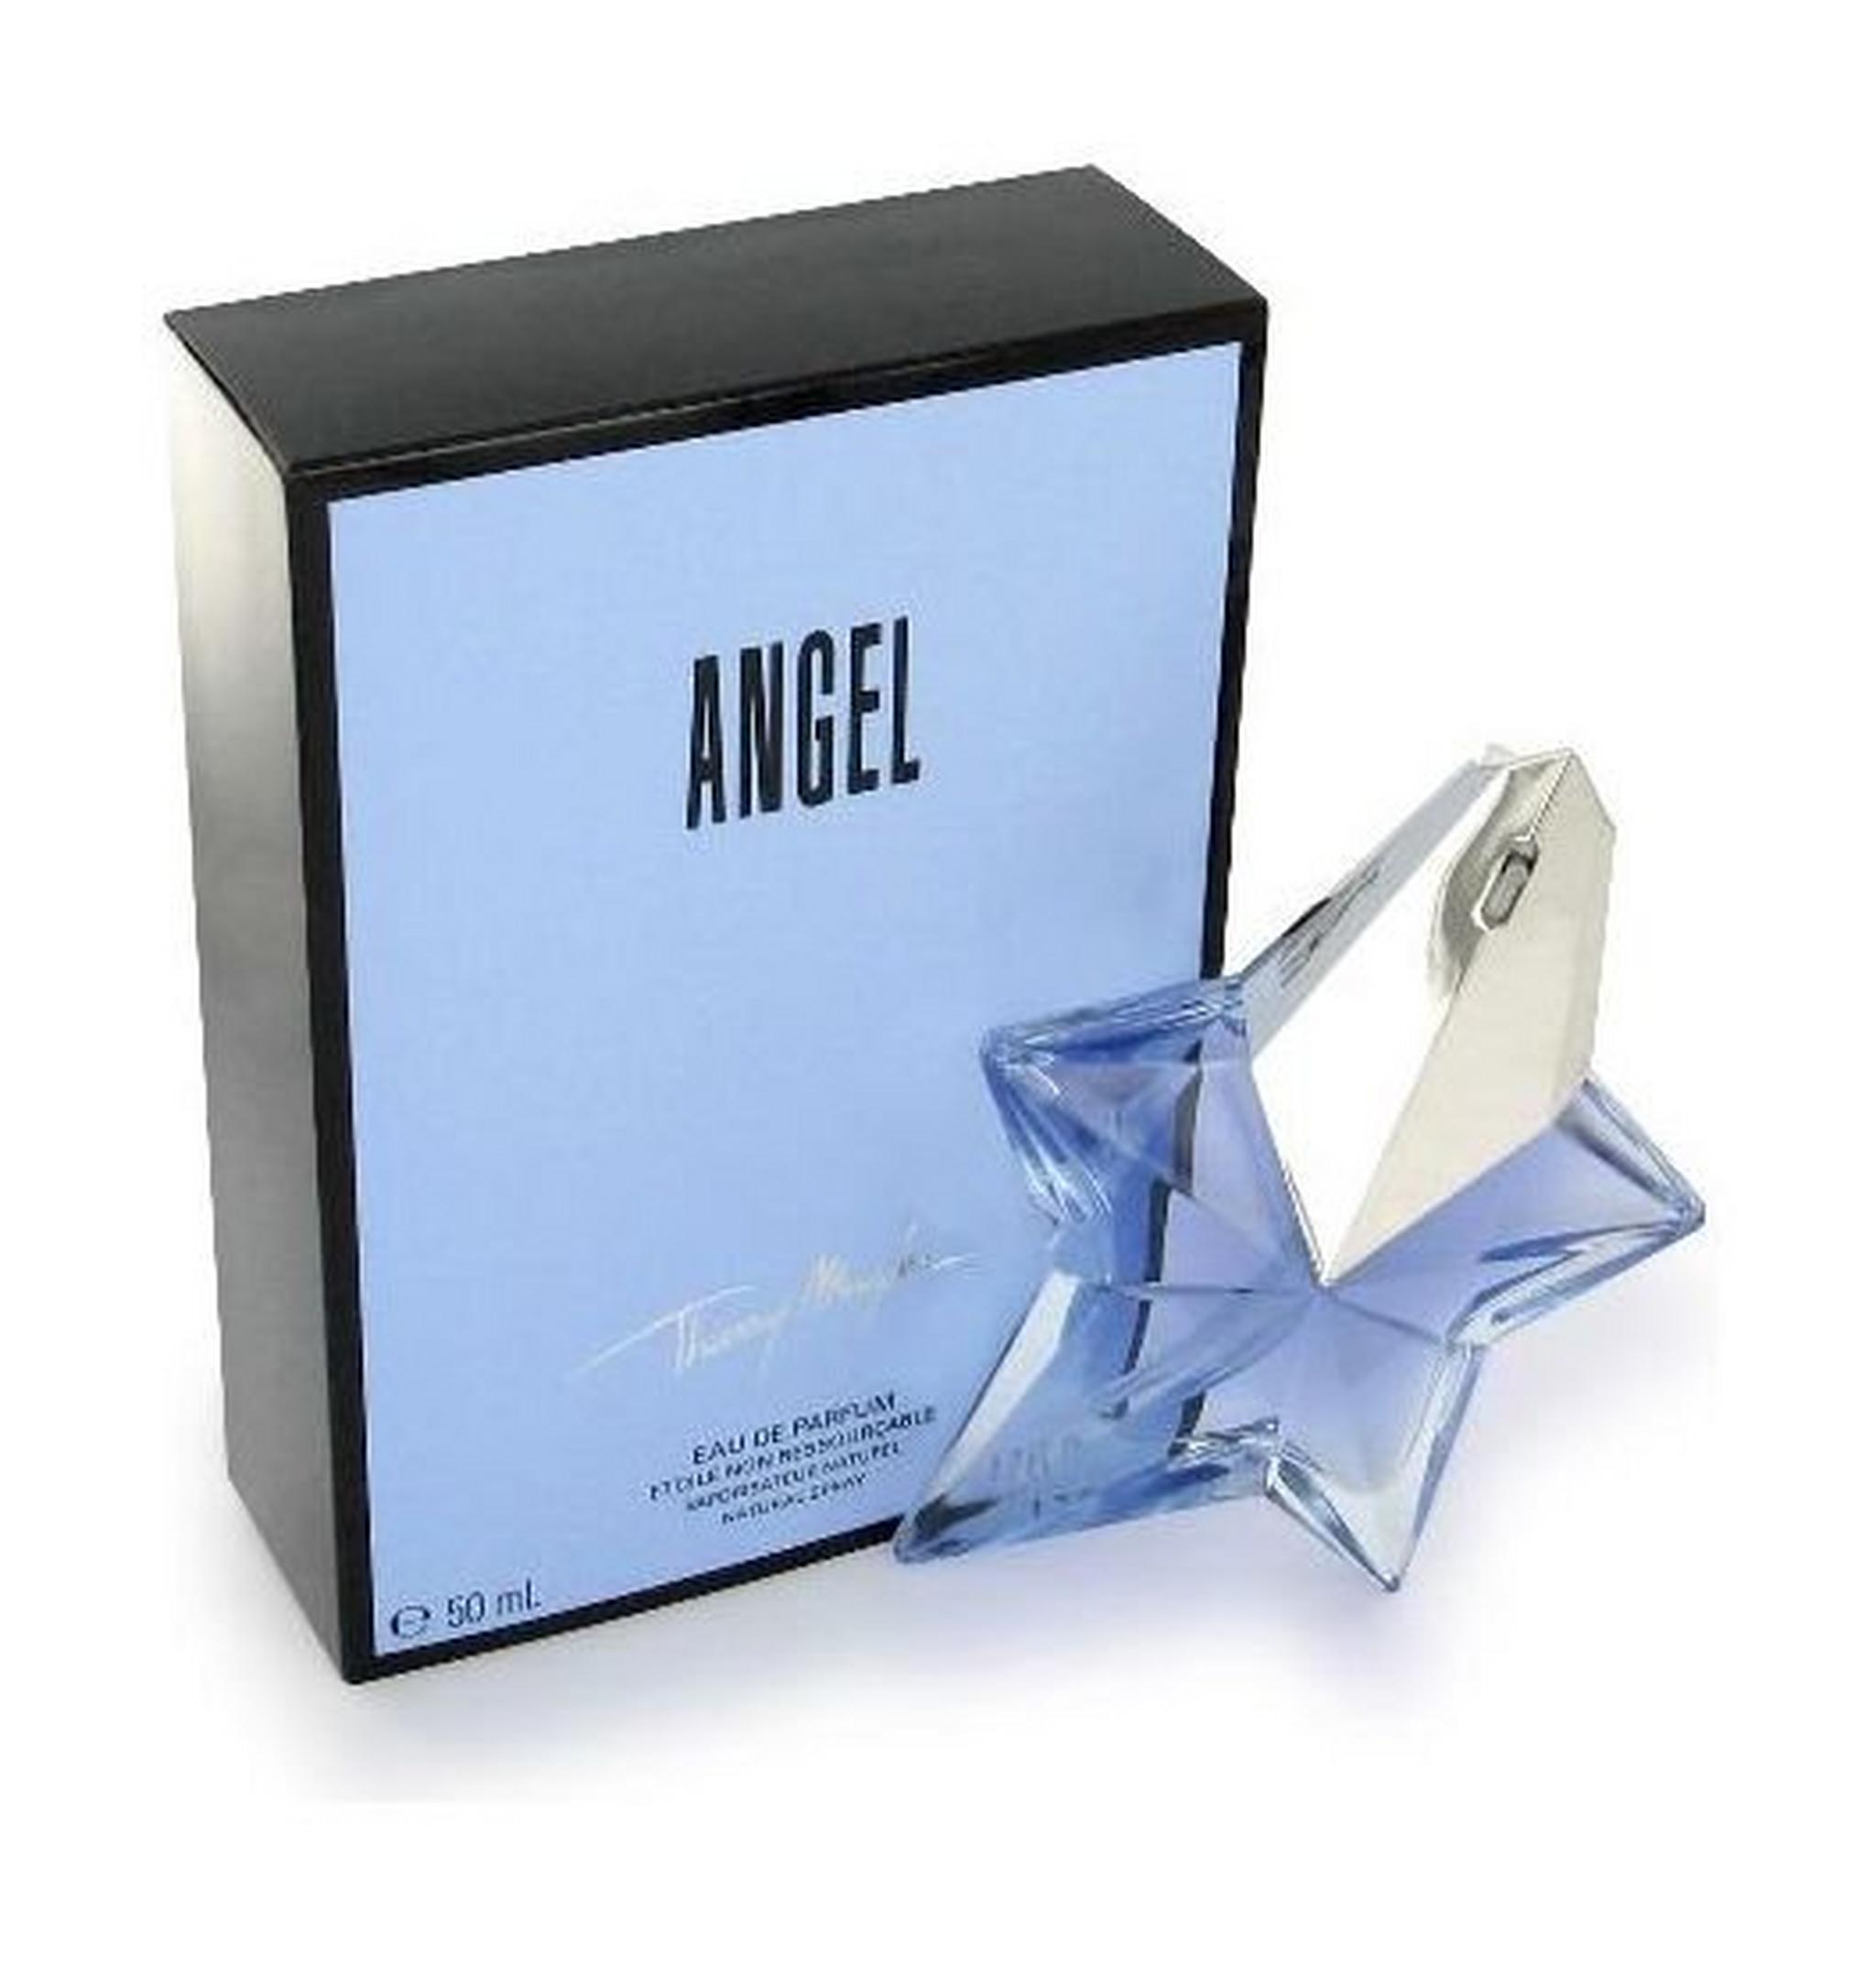 Angel by Thierry Mugler for Women 50 mL Eau de Parfum